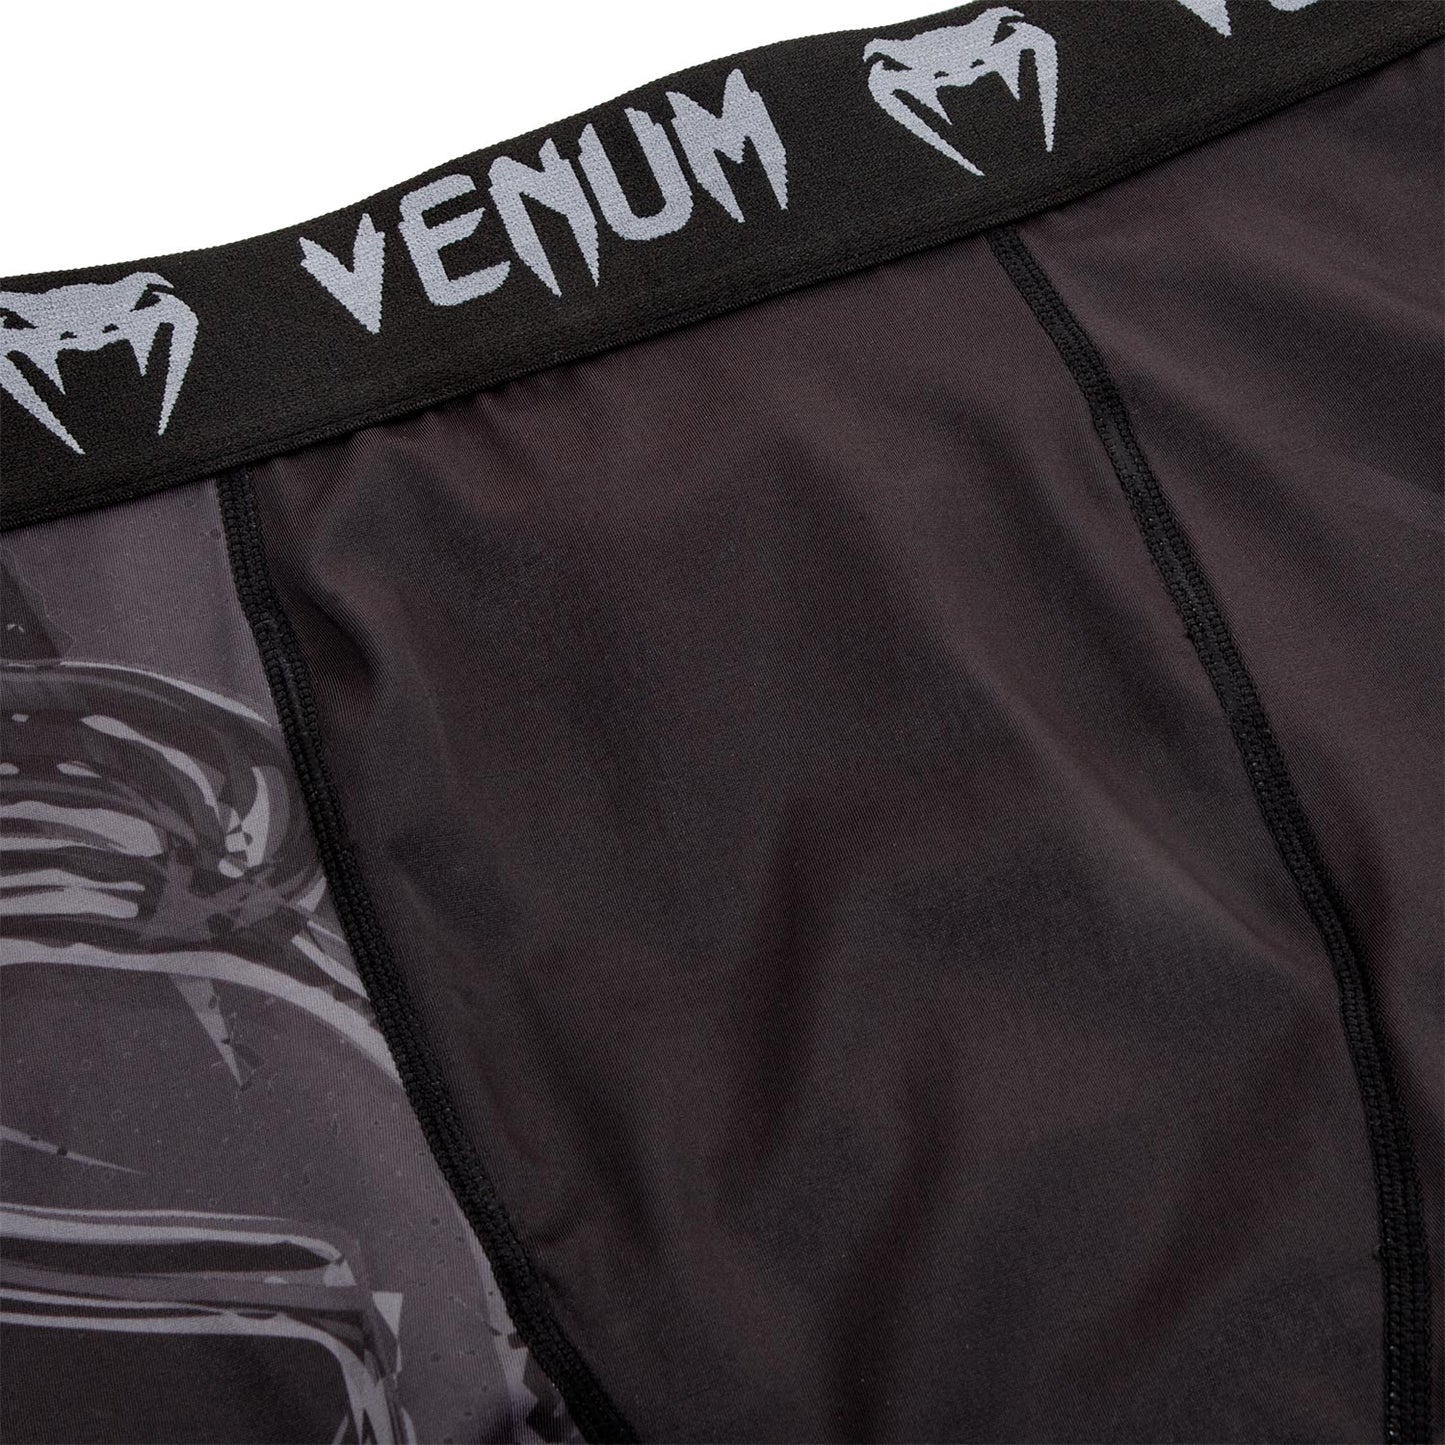 Venum Gladiator 3.0 Vale Tudo Shorts - Black/Black